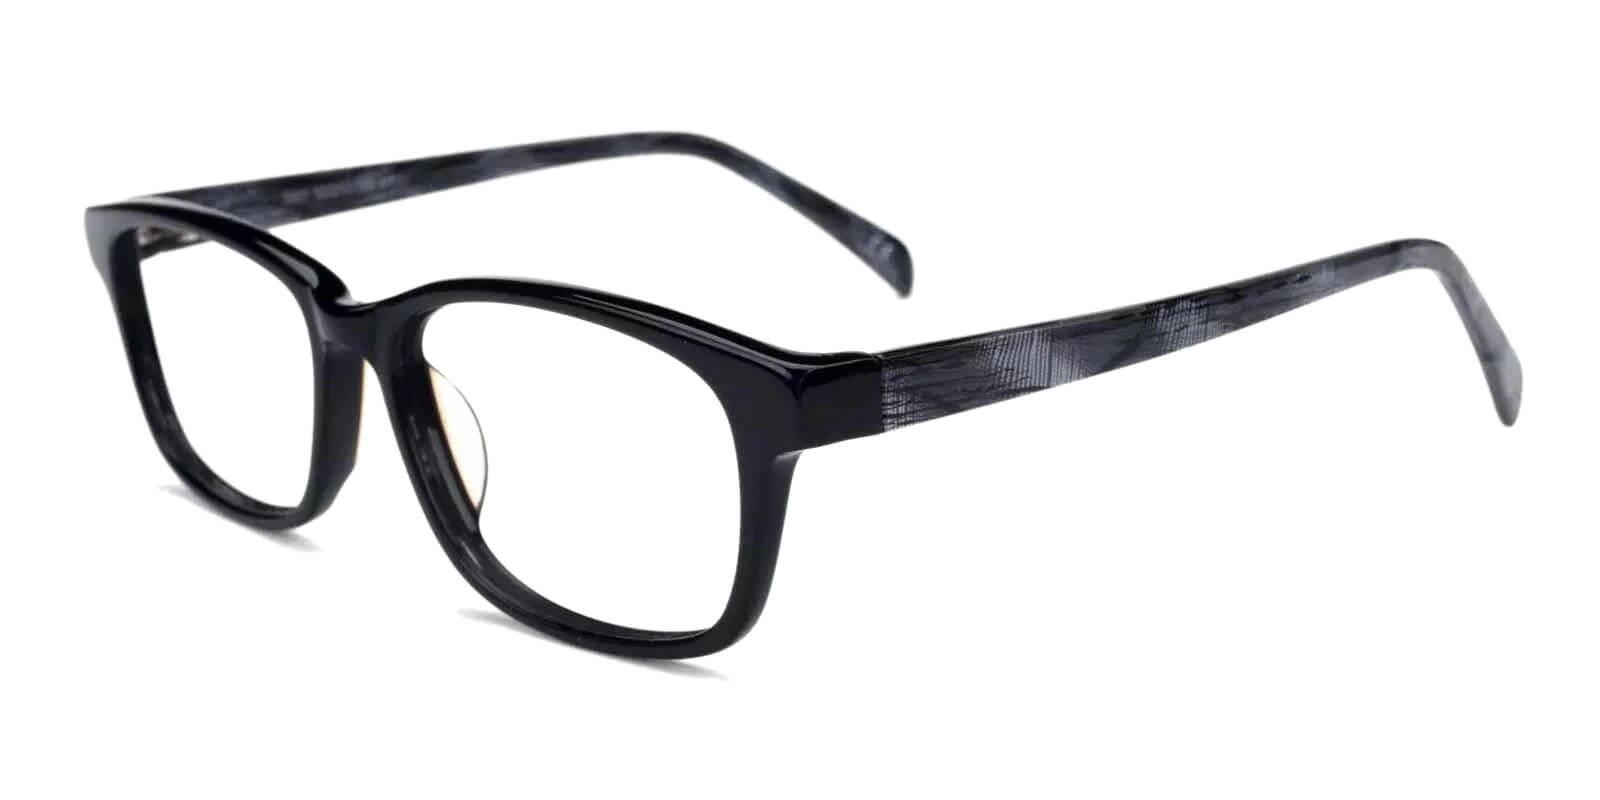 Emmi Black Acetate Eyeglasses , Fashion , UniversalBridgeFit Frames from ABBE Glasses